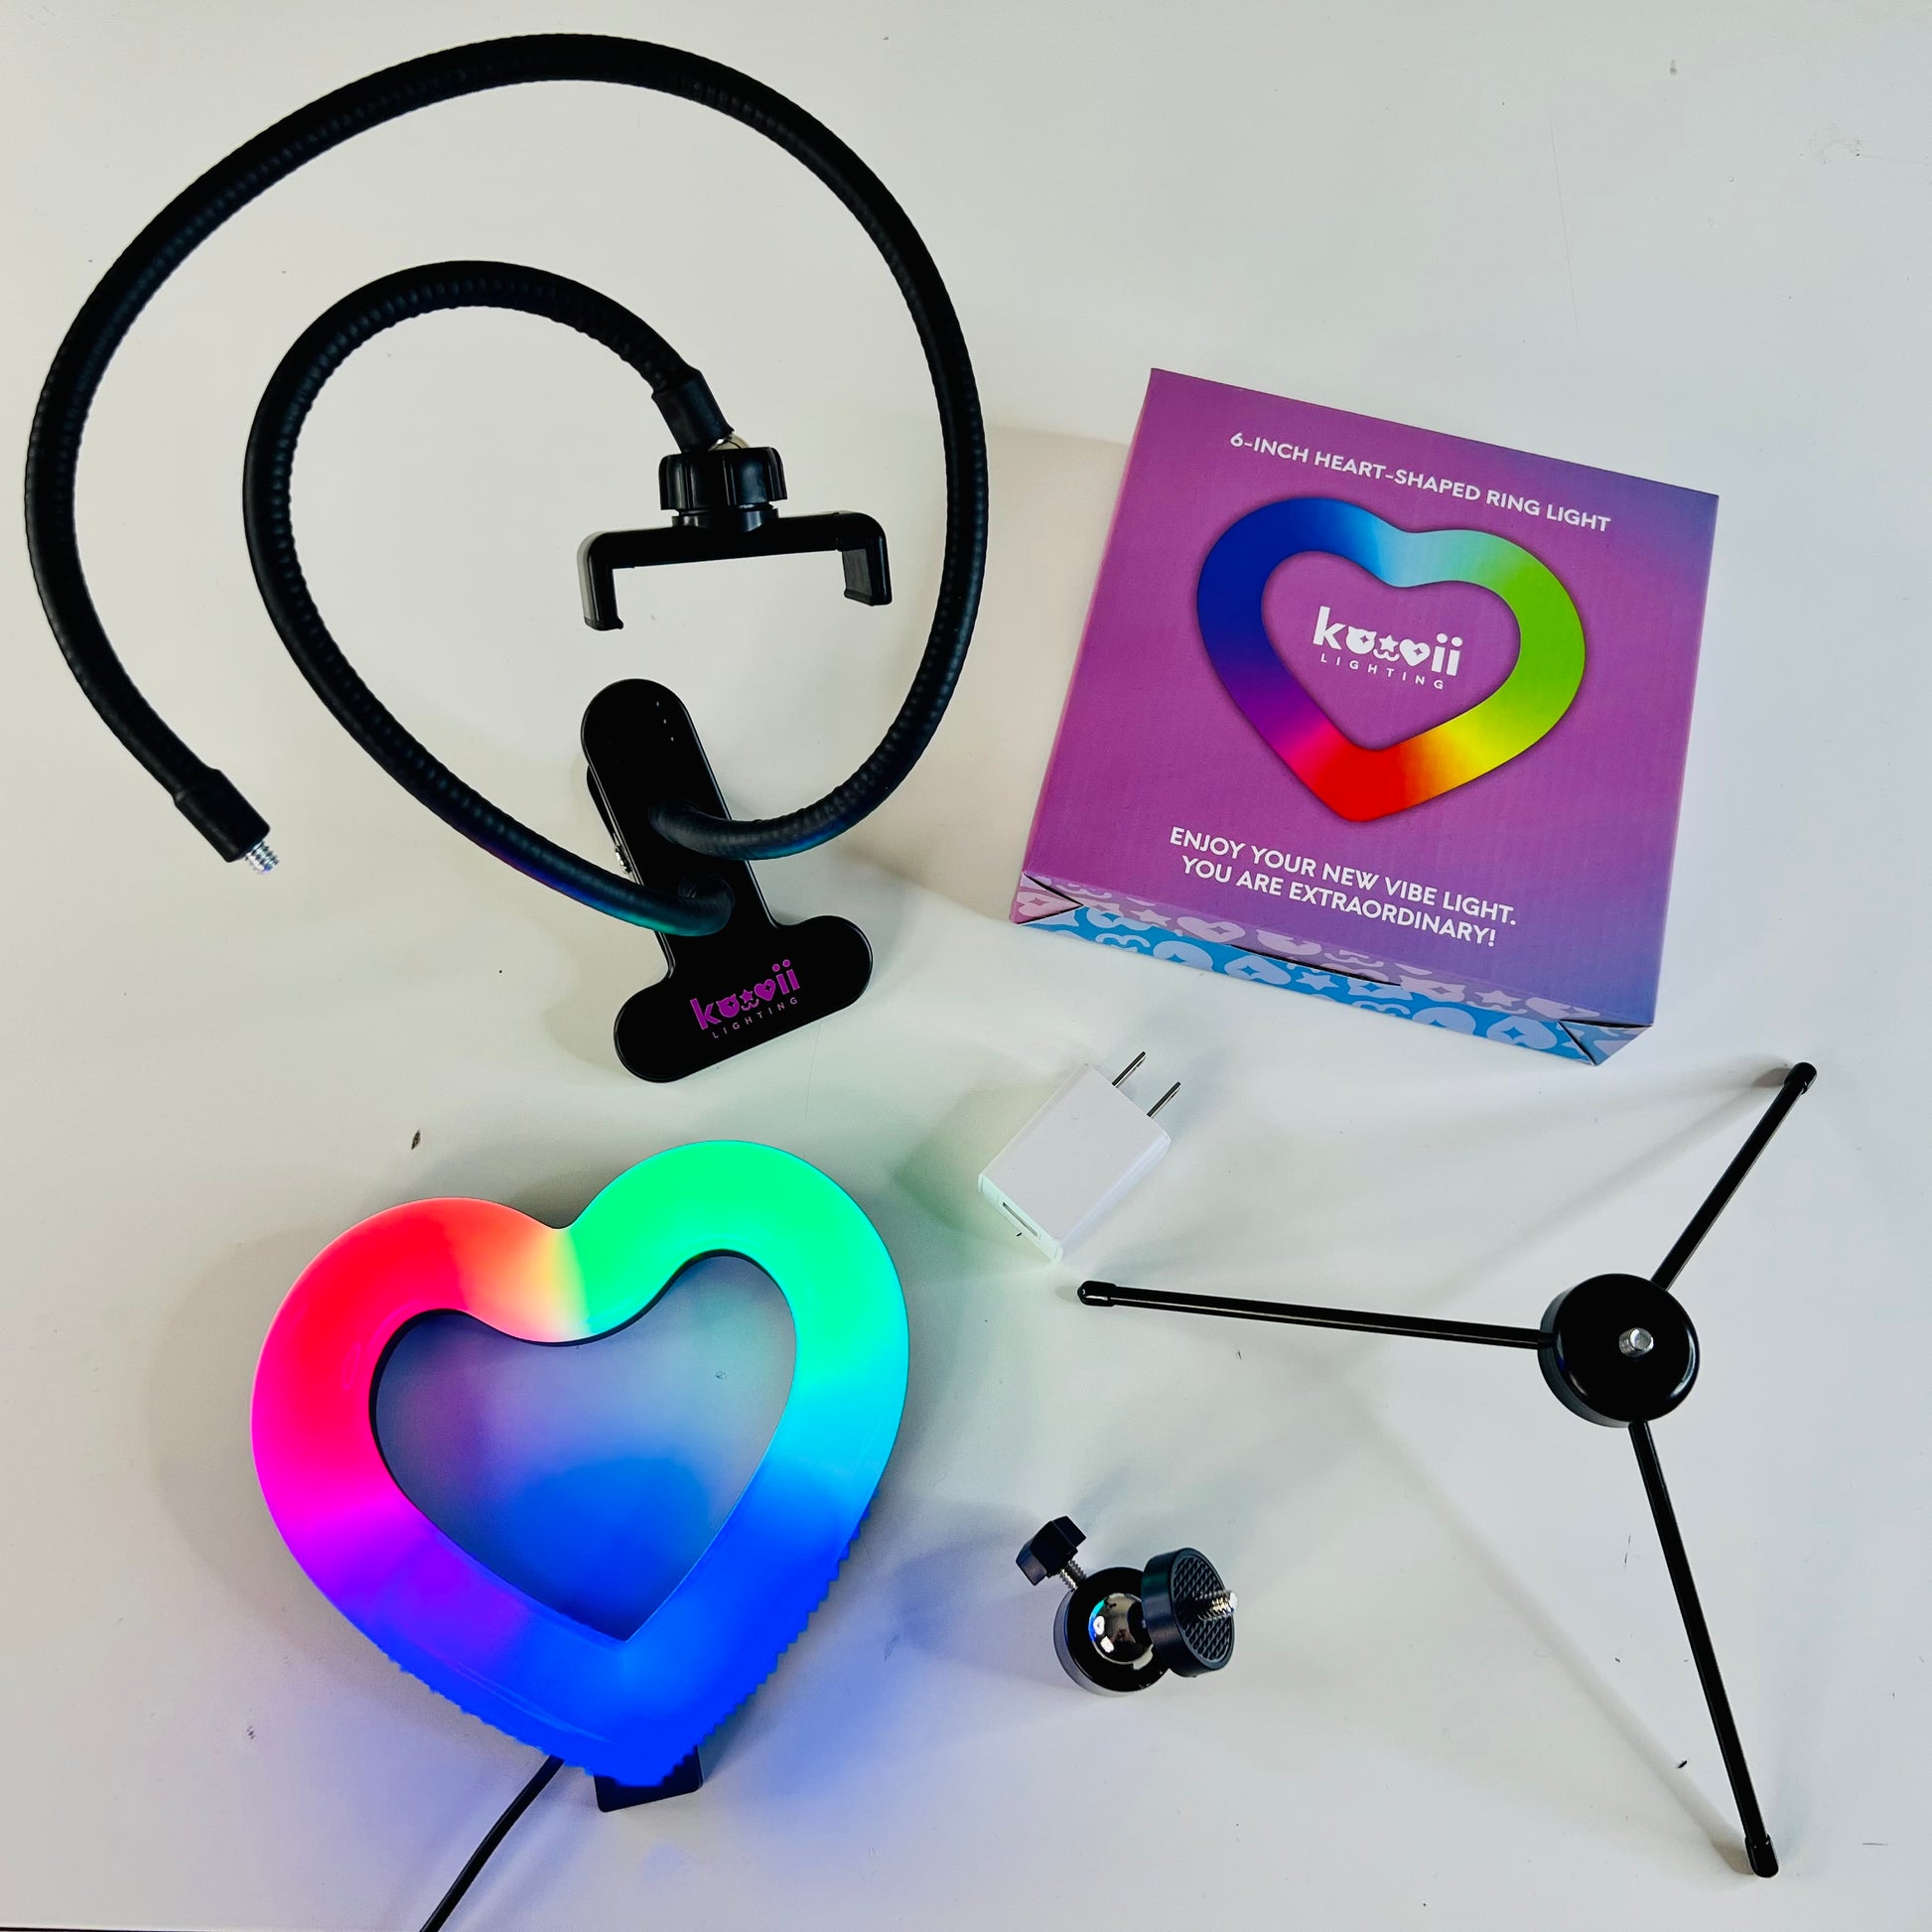 Kawaii Lighting Creator Kit - 6" Heart Shaped Ring Light with Phone Holder and Desk Clamp and Baby Tripod with Swivel Ball Head and USB Wall Plug.